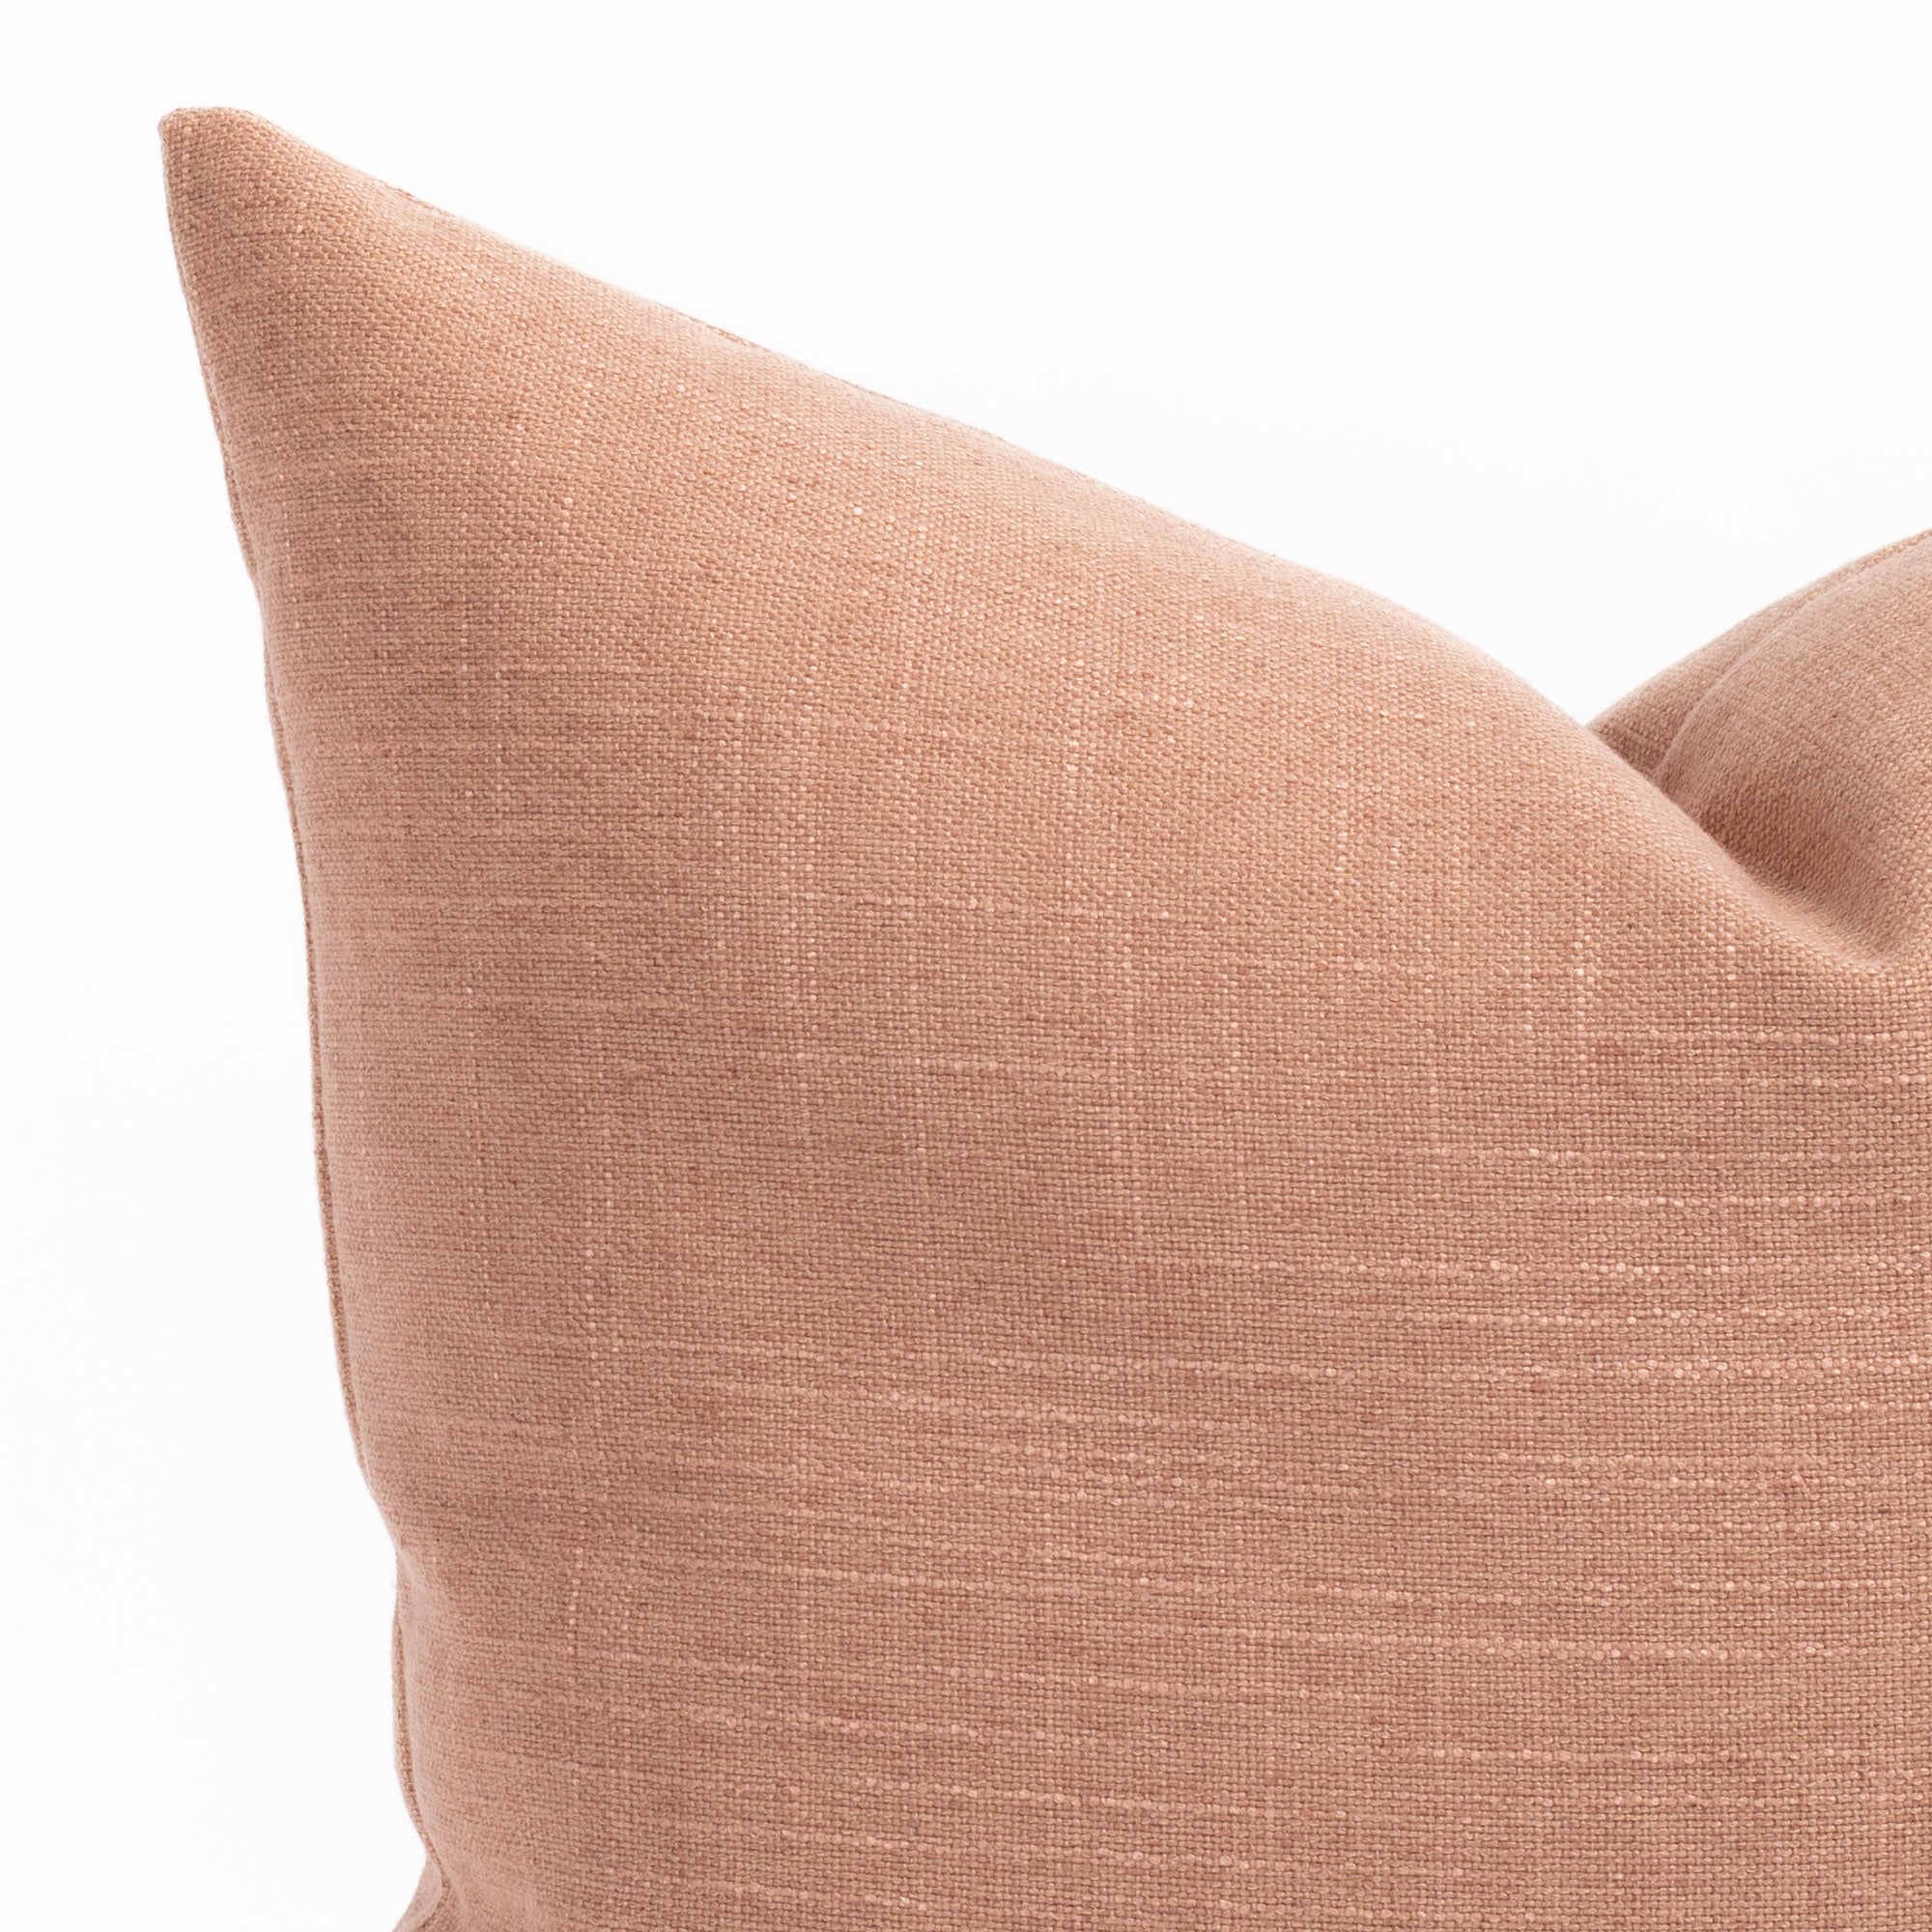 a terracotta orange pink throw pillow : close up photo